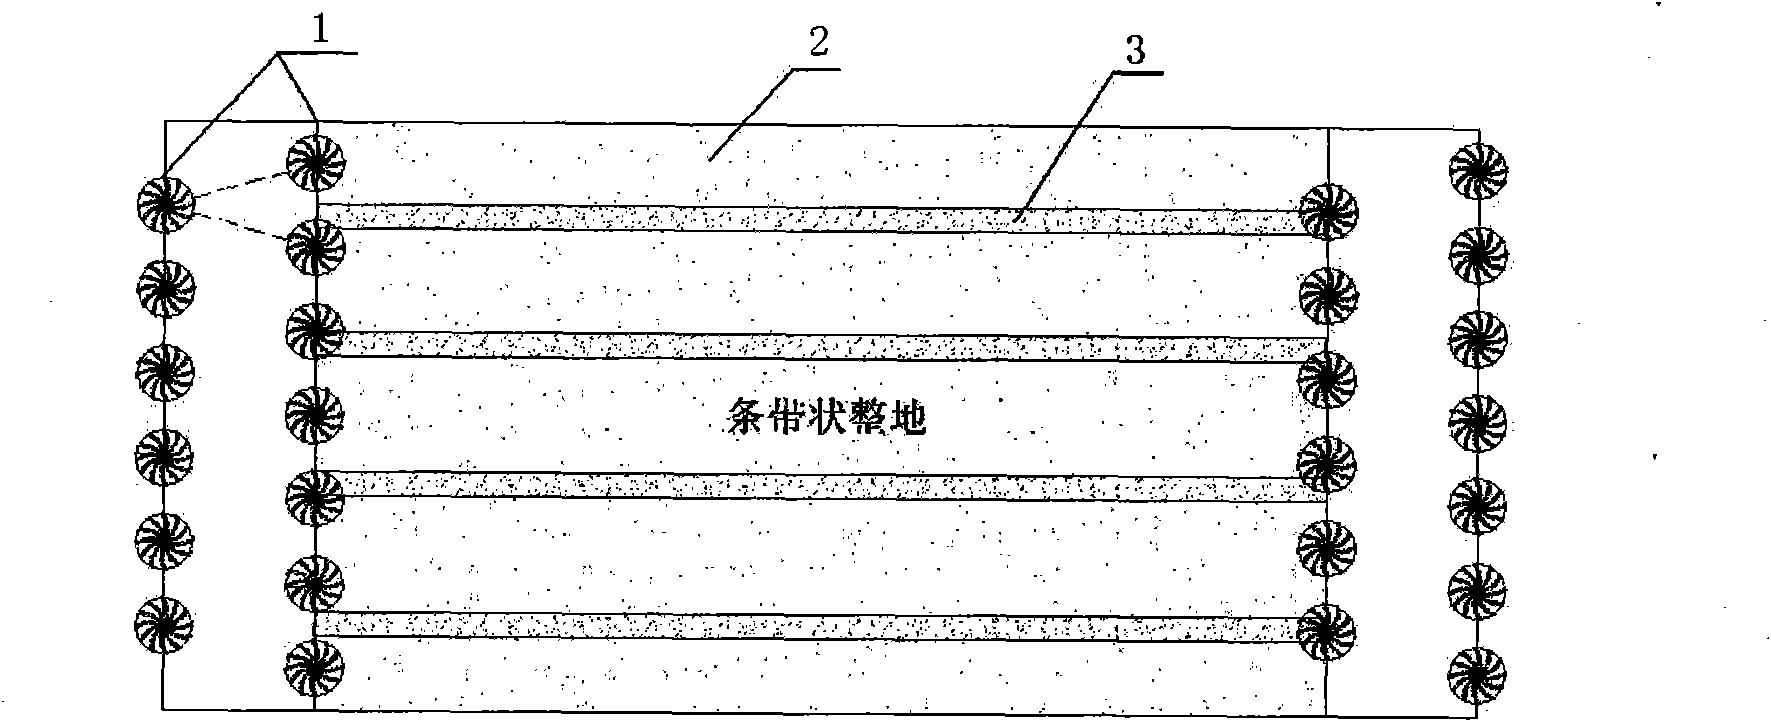 Fast afforestation method of tamarix chinensis at coastal saline-alkali soil